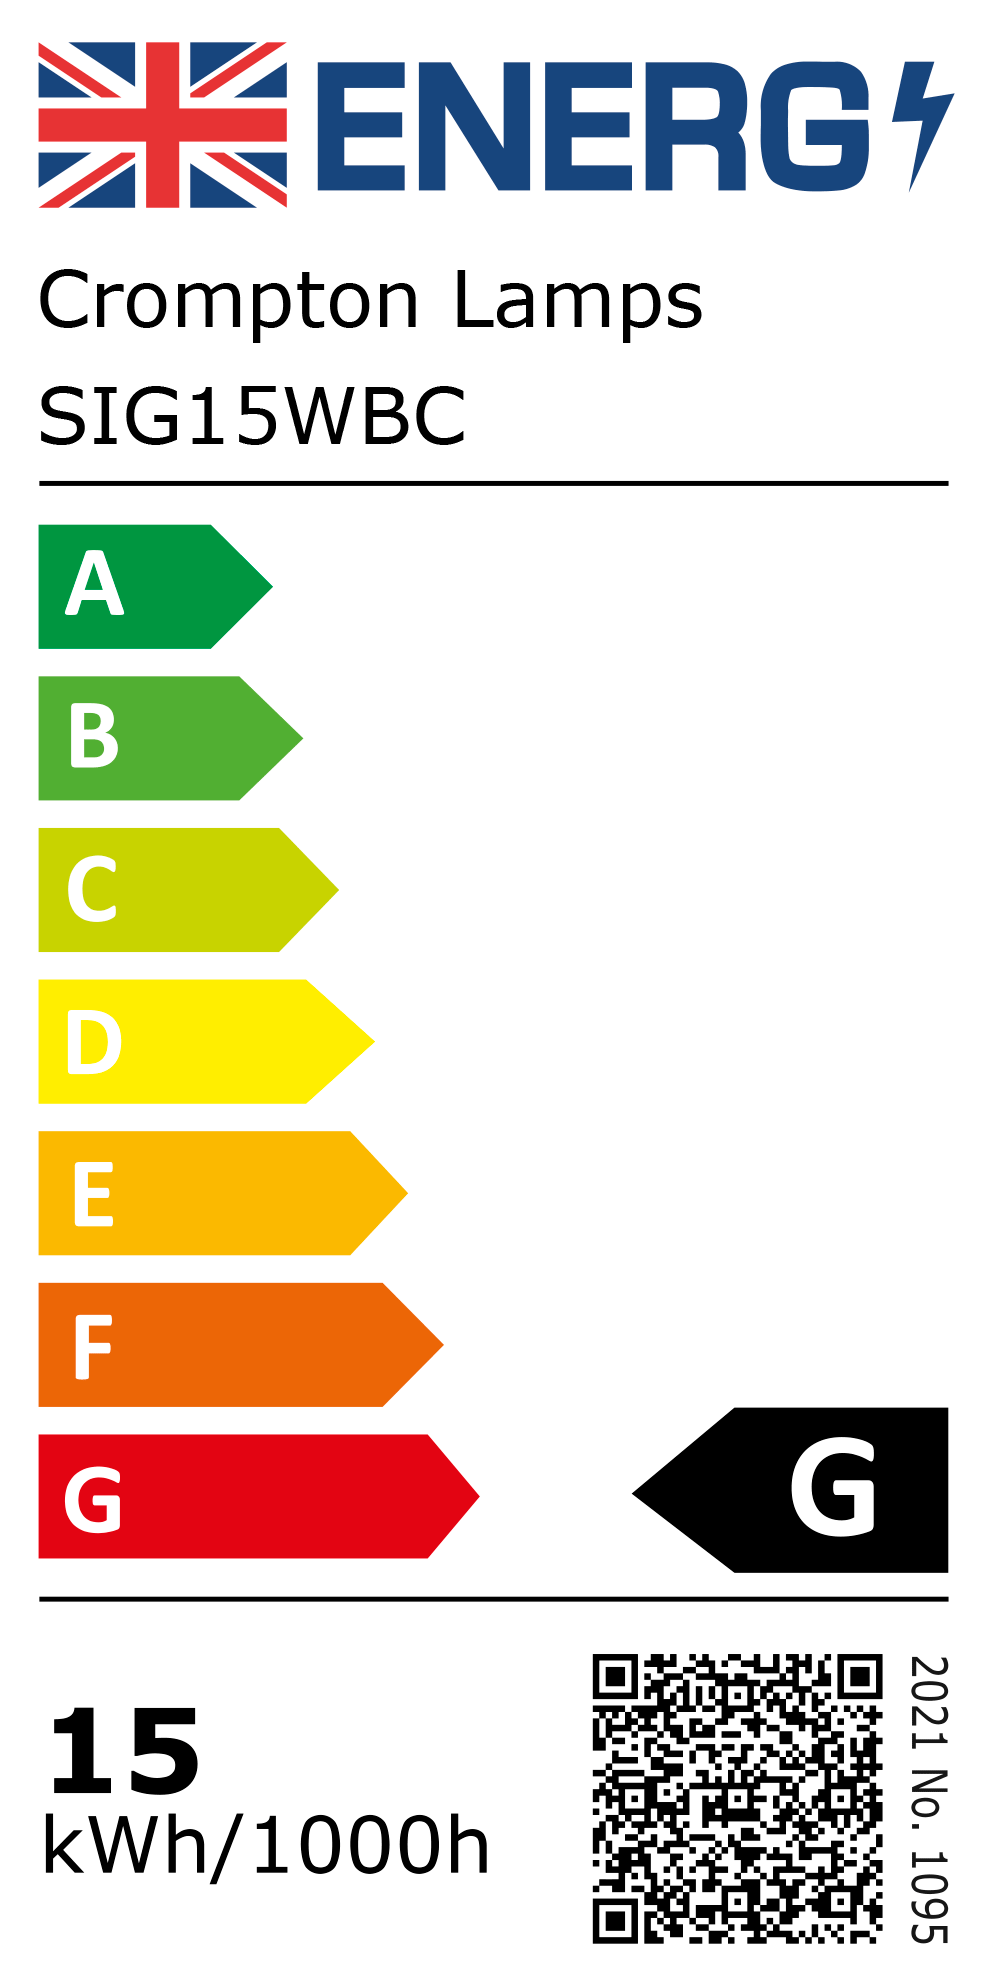 New 2021 Energy Rating Label: MPN SIG15WBC